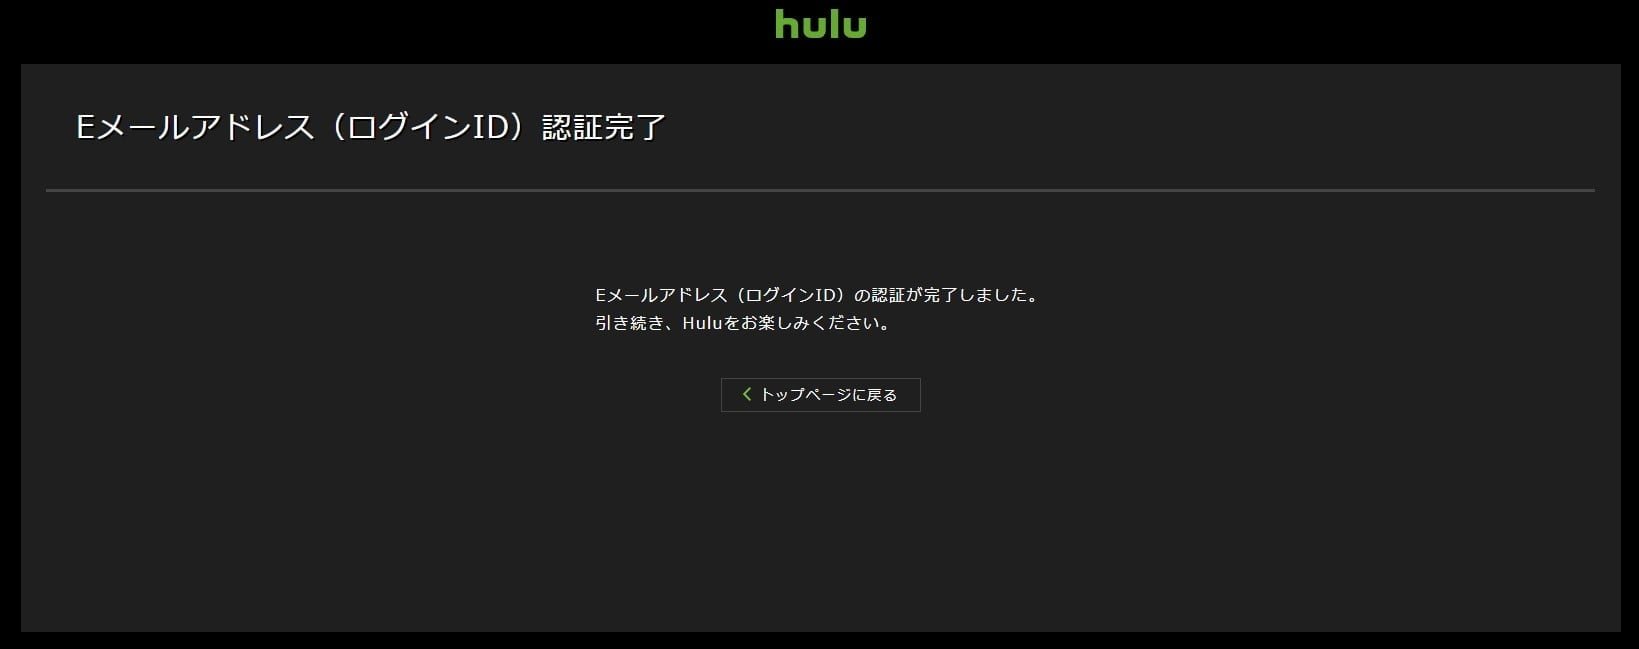 Hulu登録完了